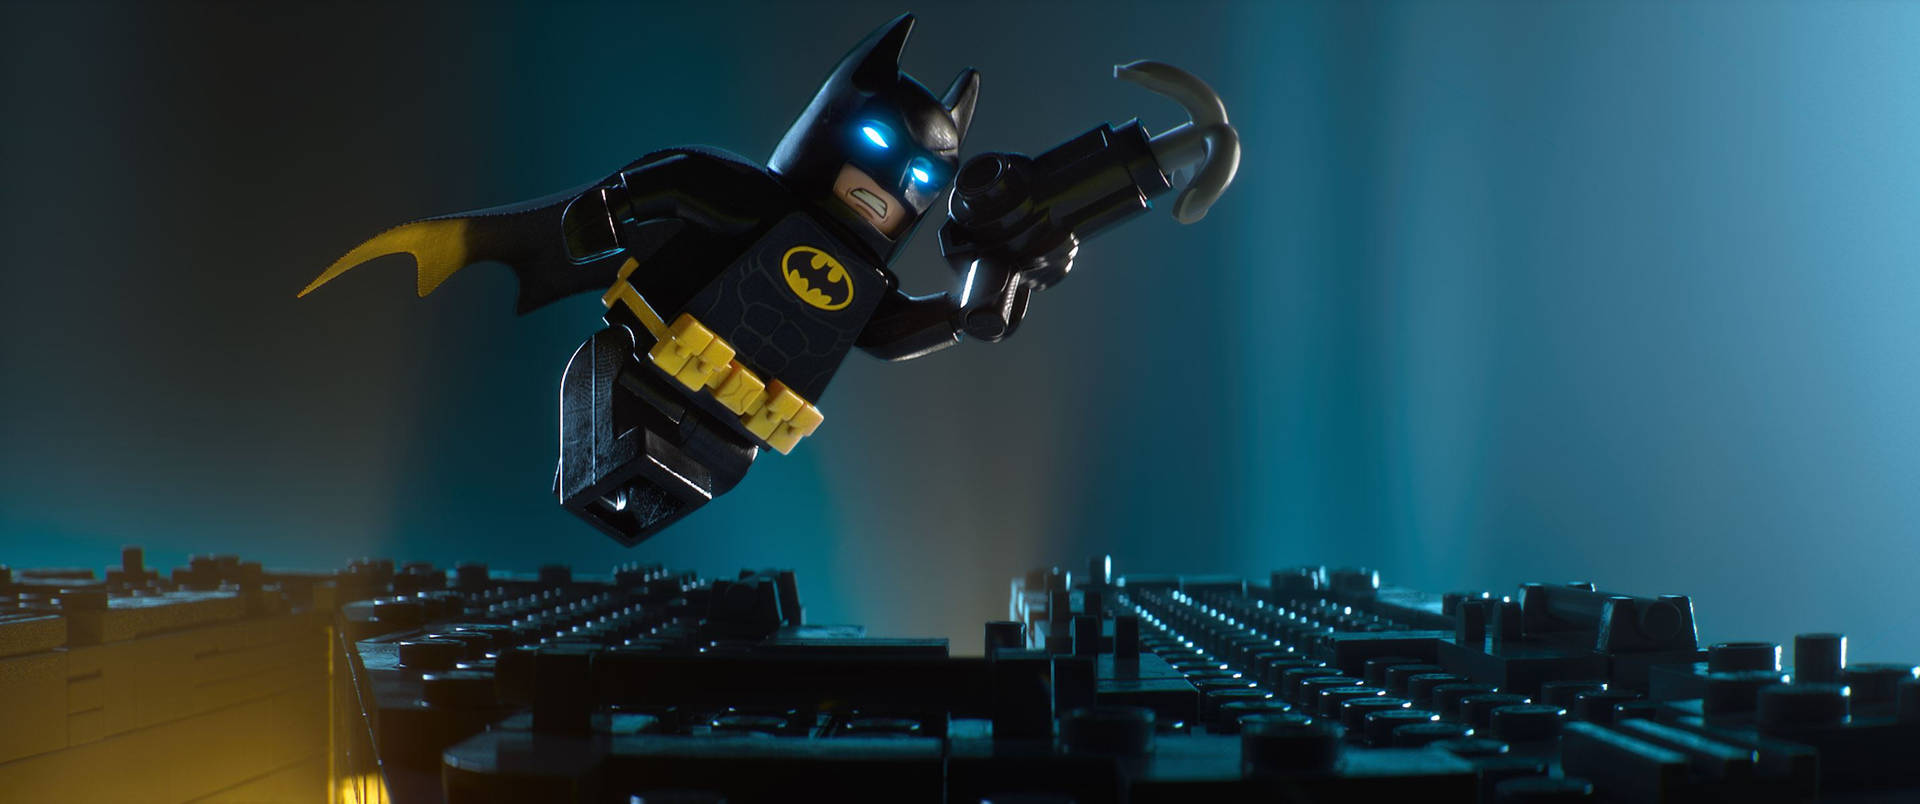 The Lego Batman Movie Flying Batman Scene Background